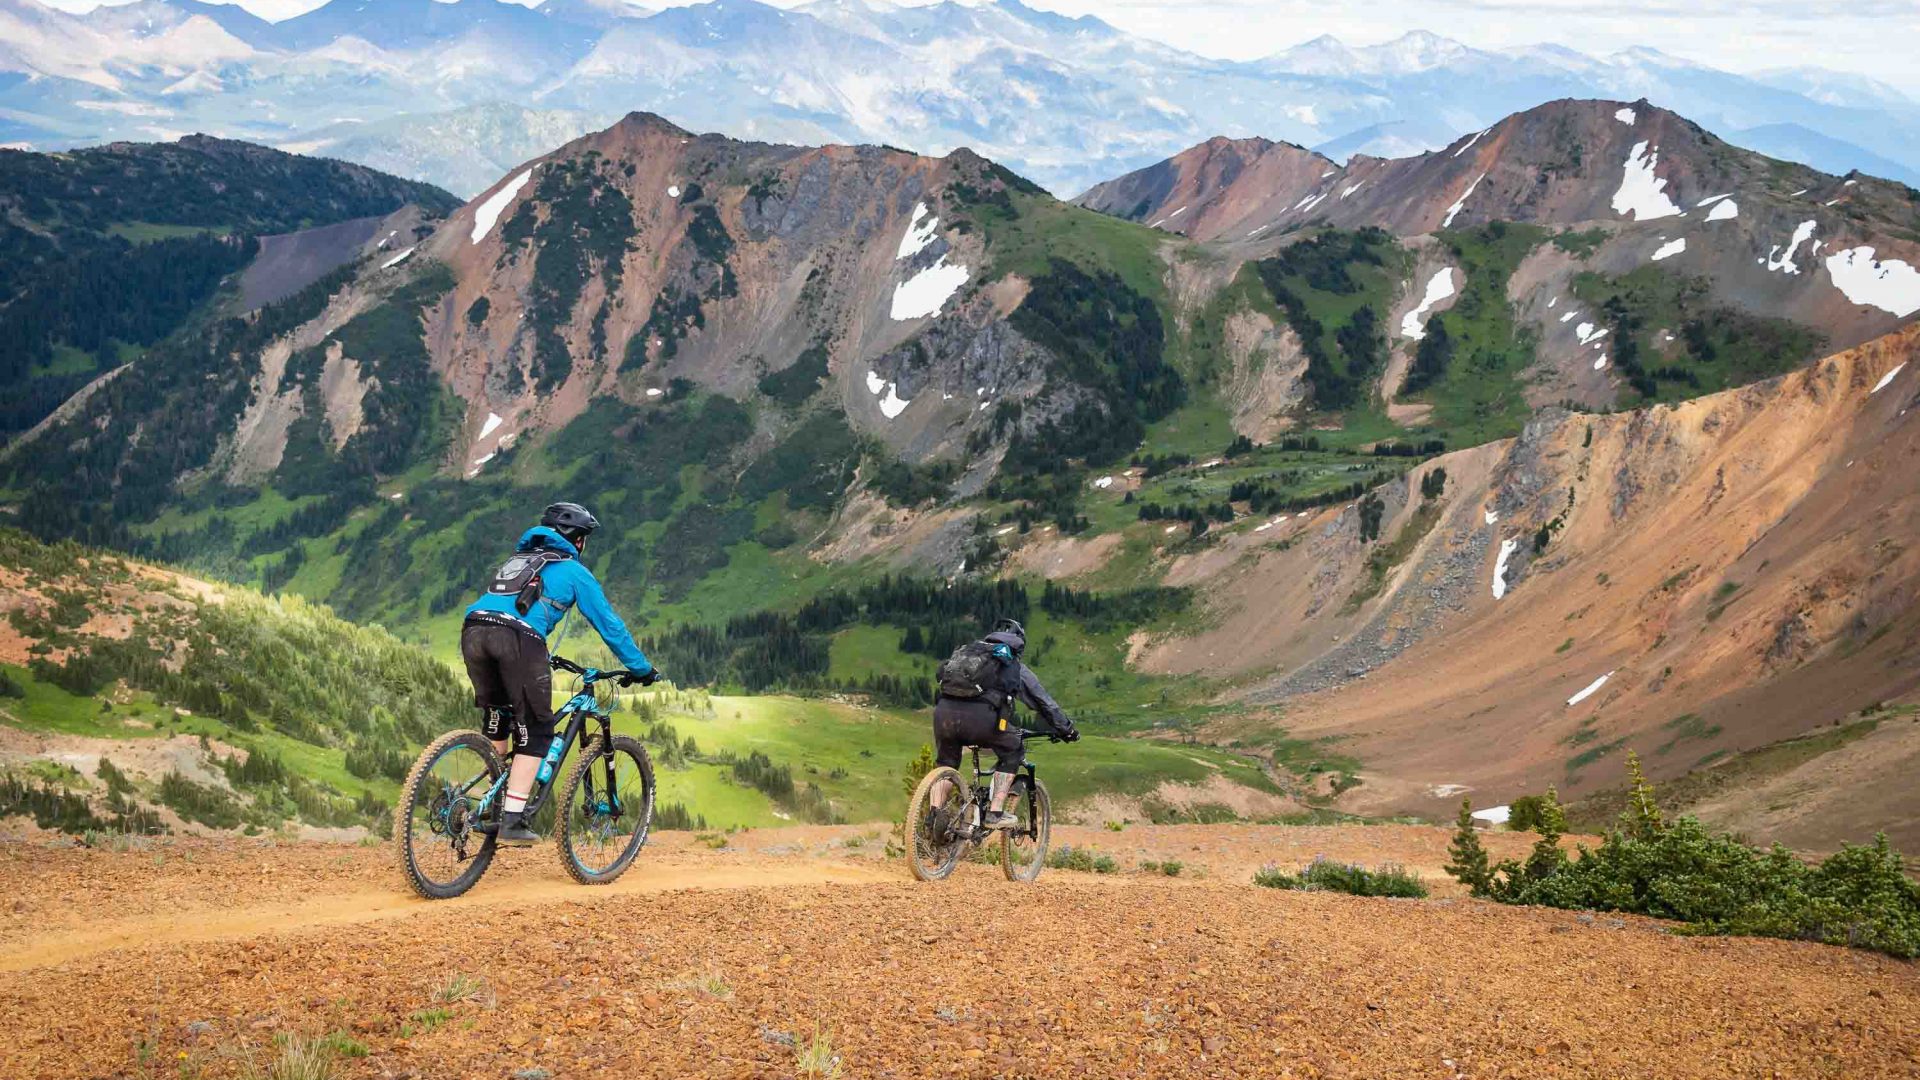 Mountain bikers on a gravel trail riding towards mountains.